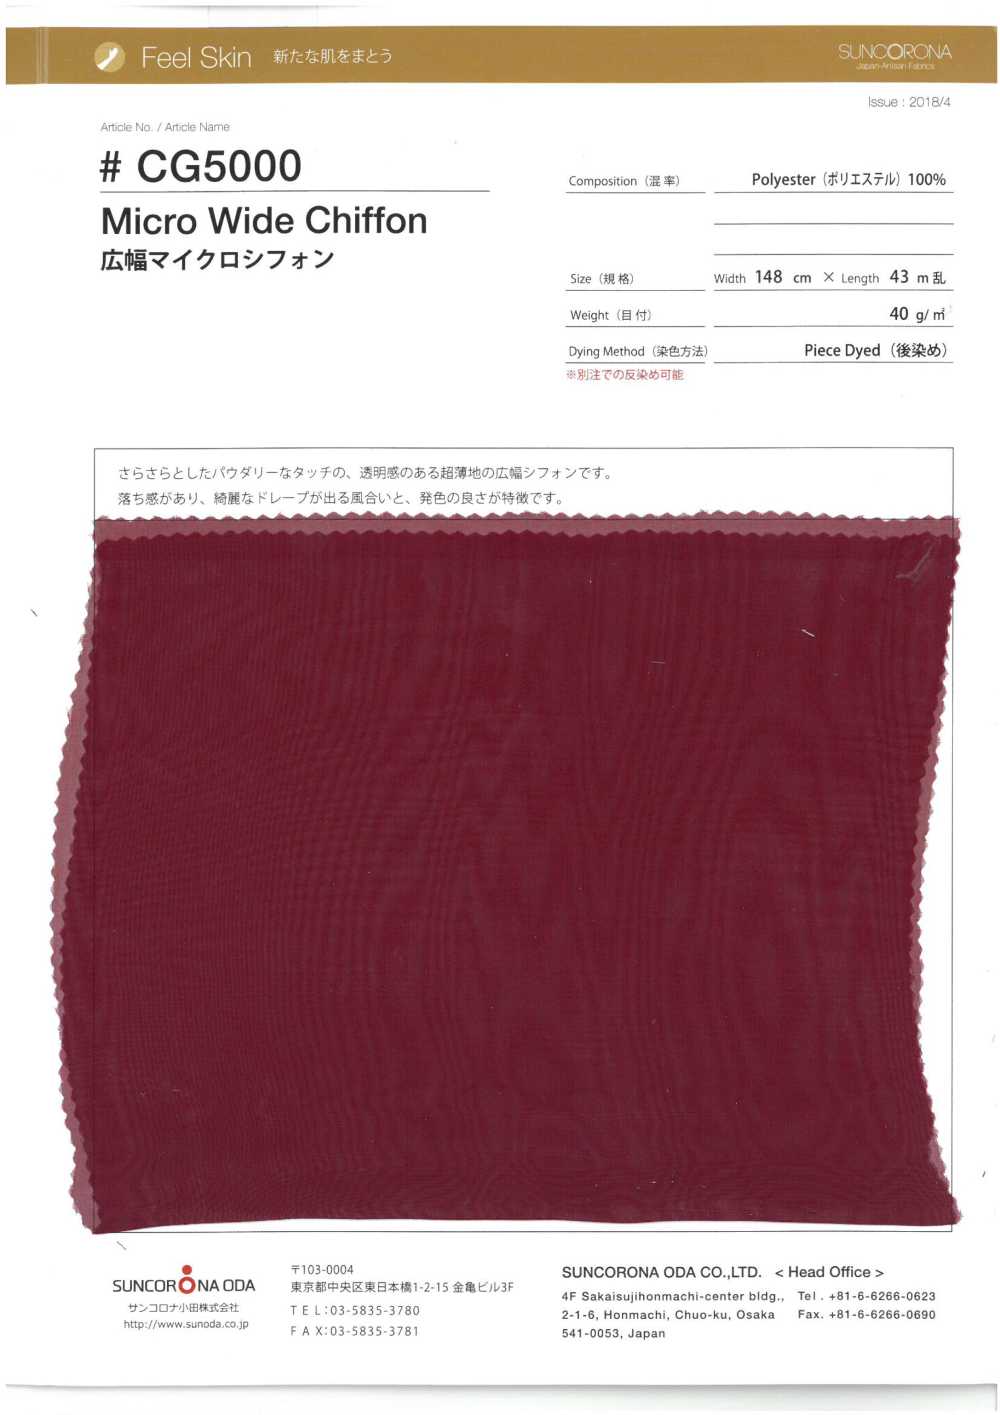 CG5000 Breiter Micro-Chiffon[Textilgewebe] Suncorona Oda